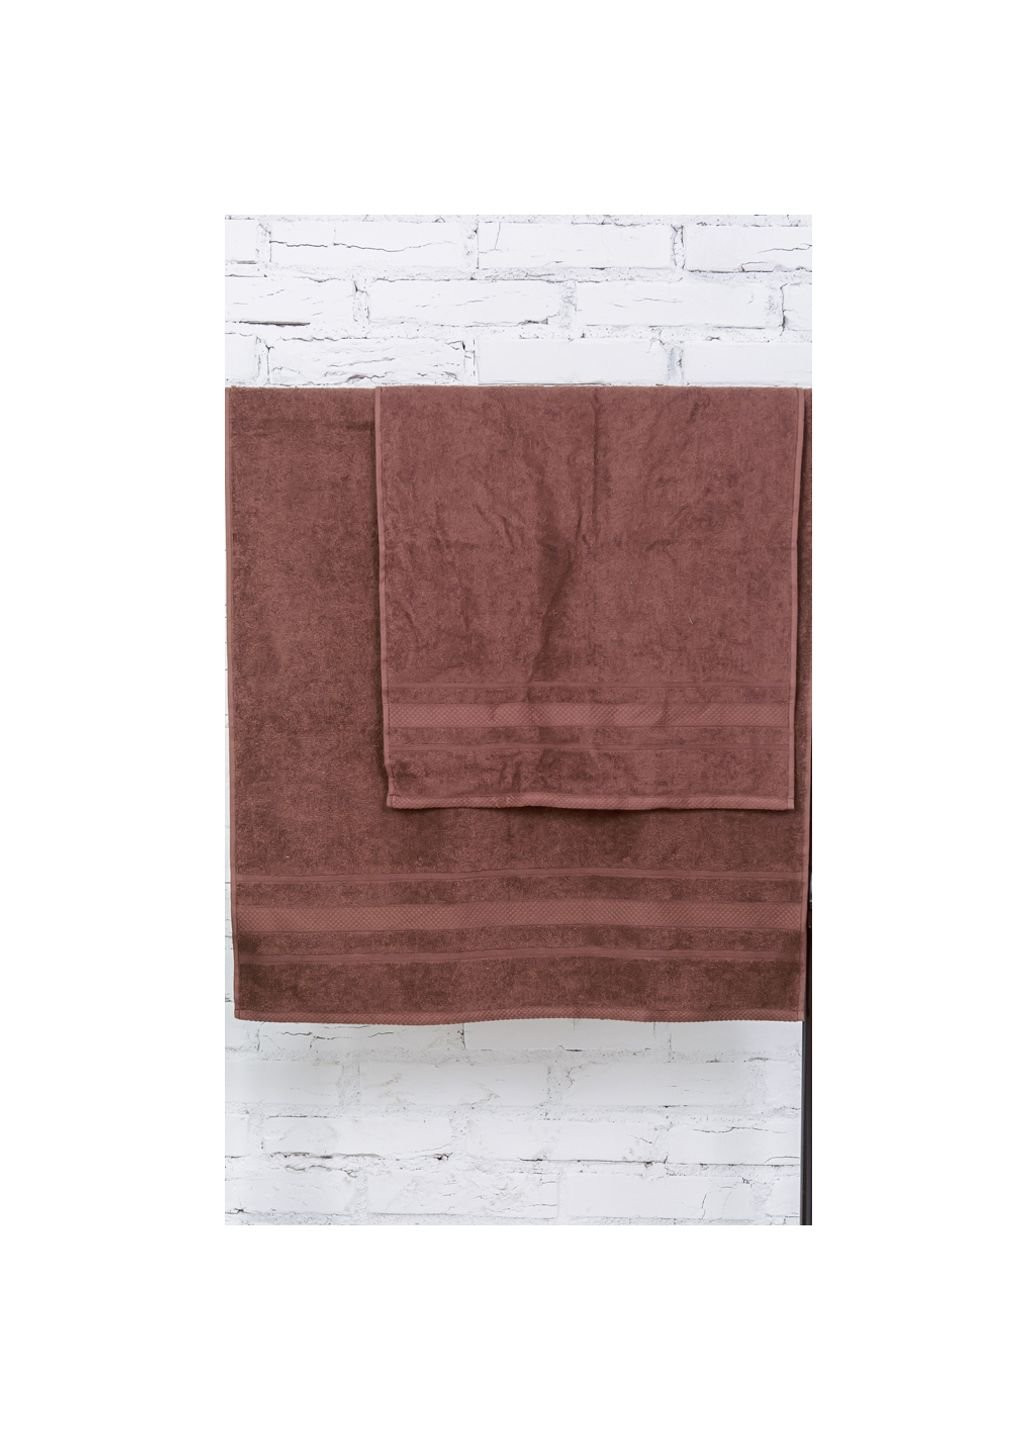 Mirson полотенце набор банный №5001 softness brown 50x90, 70x140 (2200003182934) коричневый производство - Украина